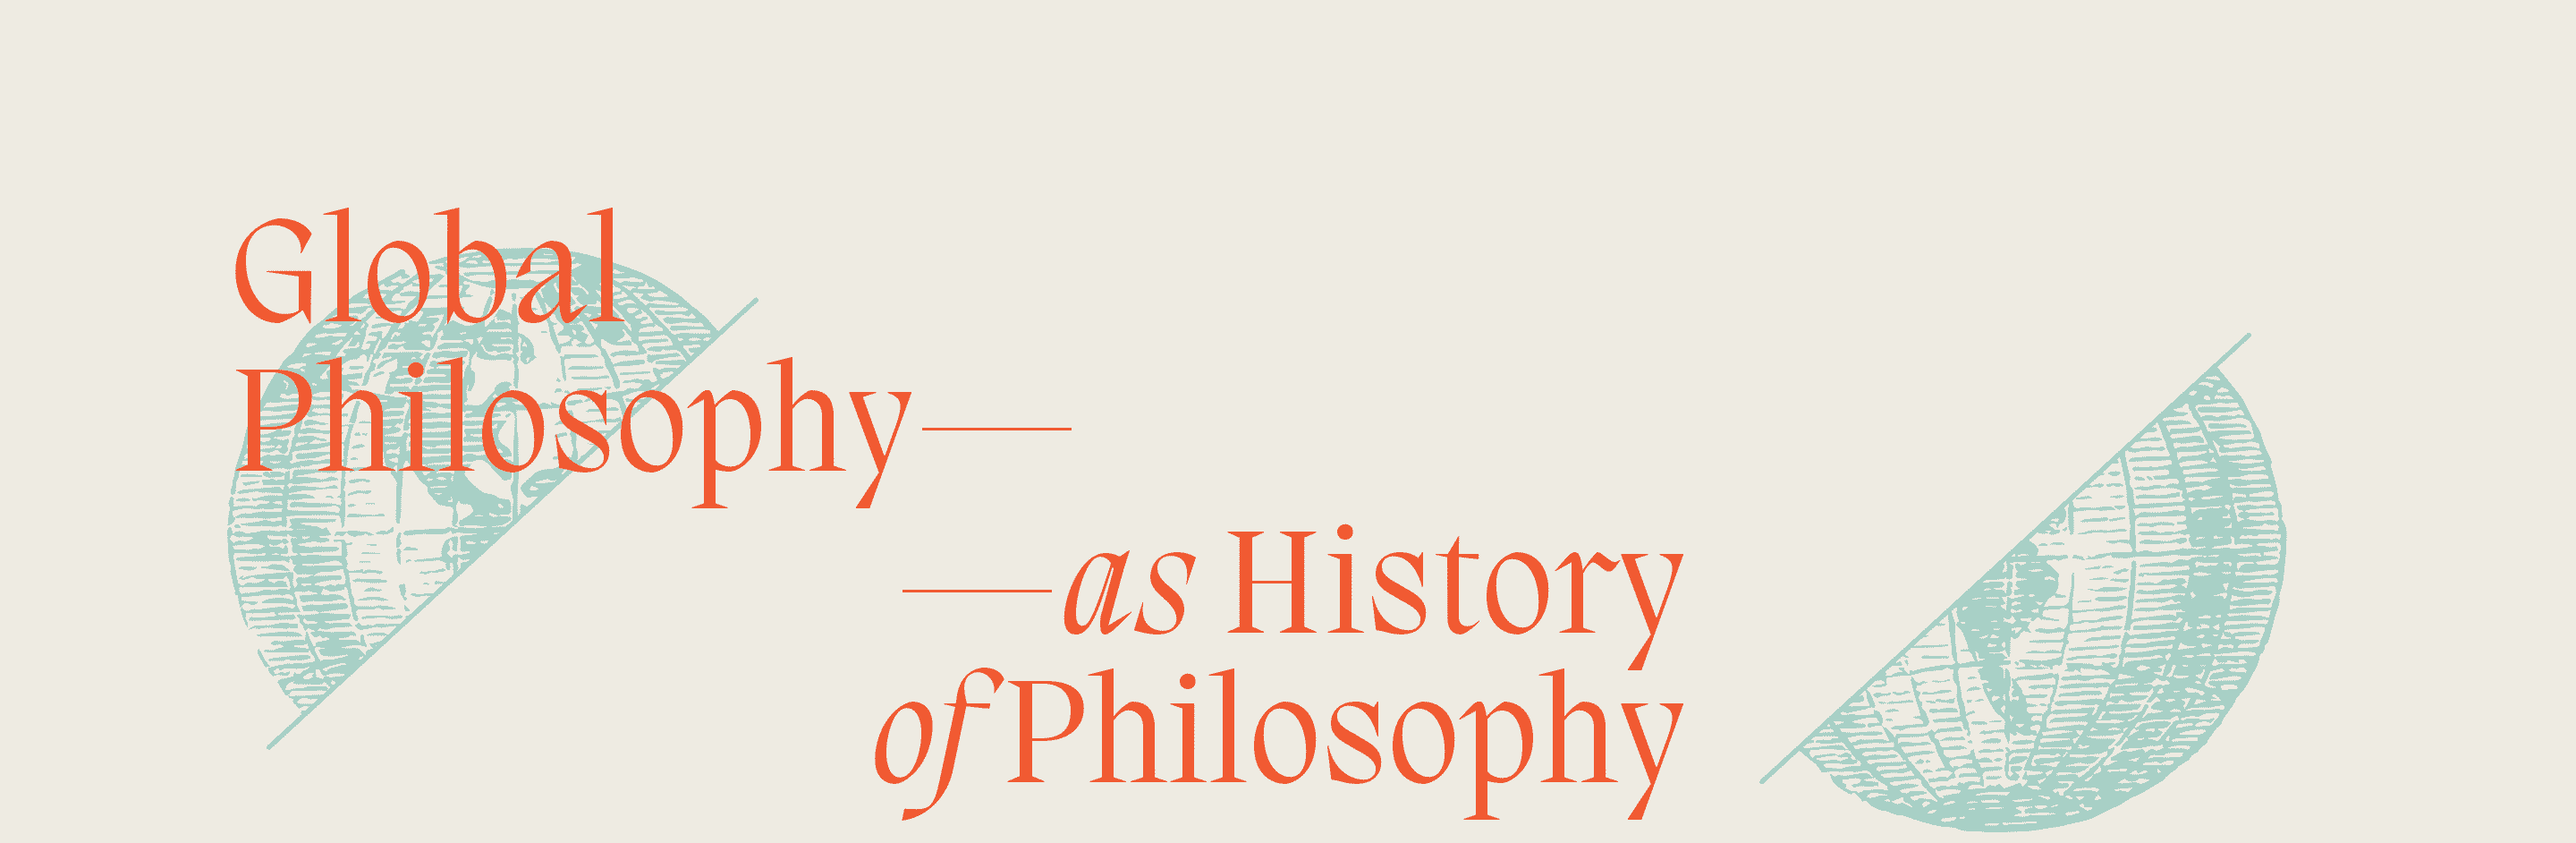 Global Philosophy as History of Philosophy